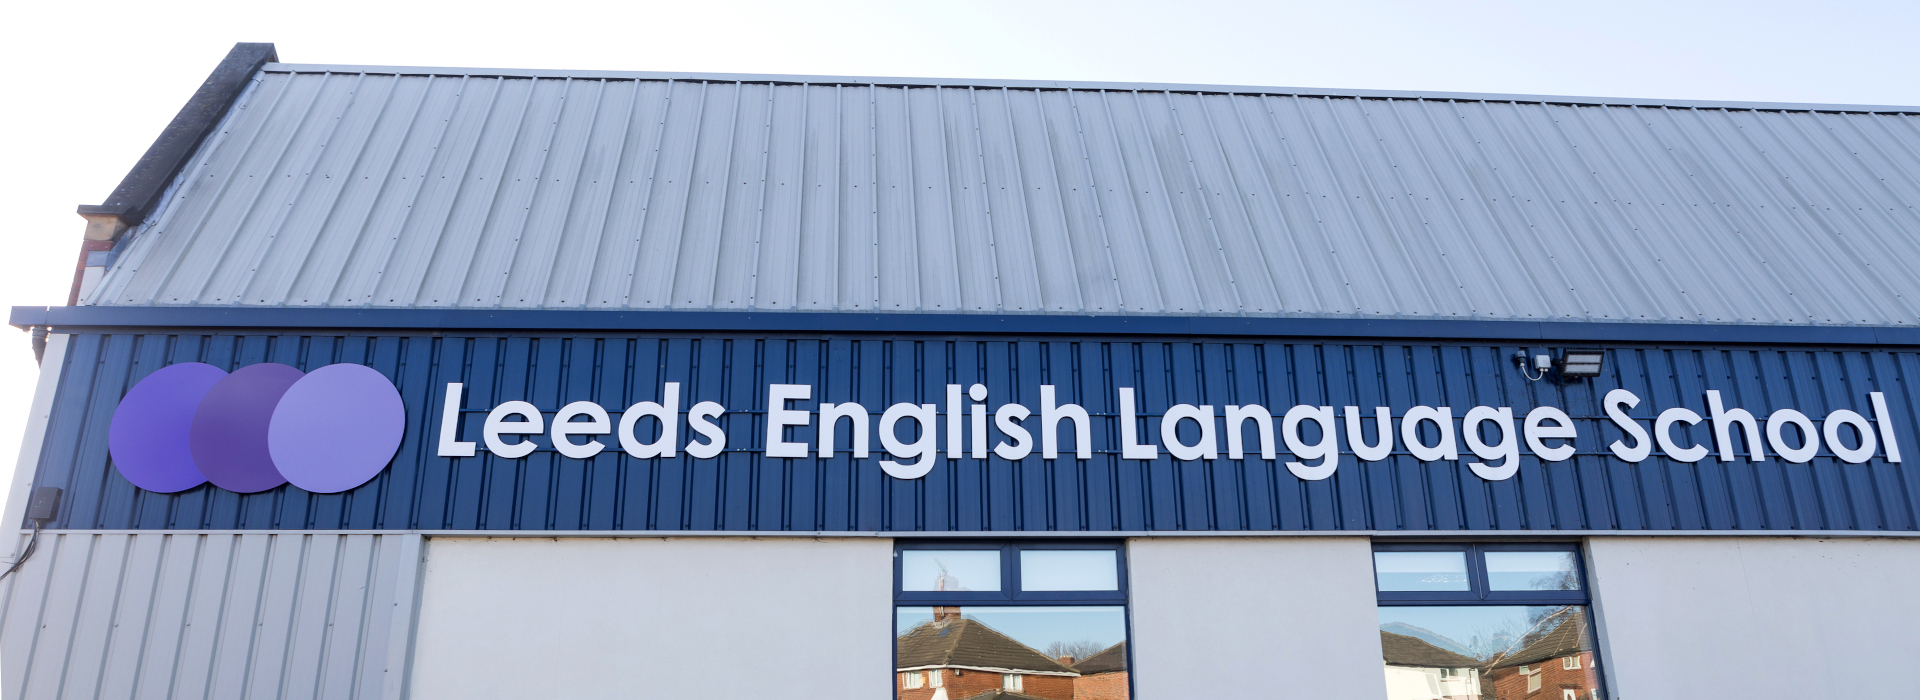 leeds english language school burley road